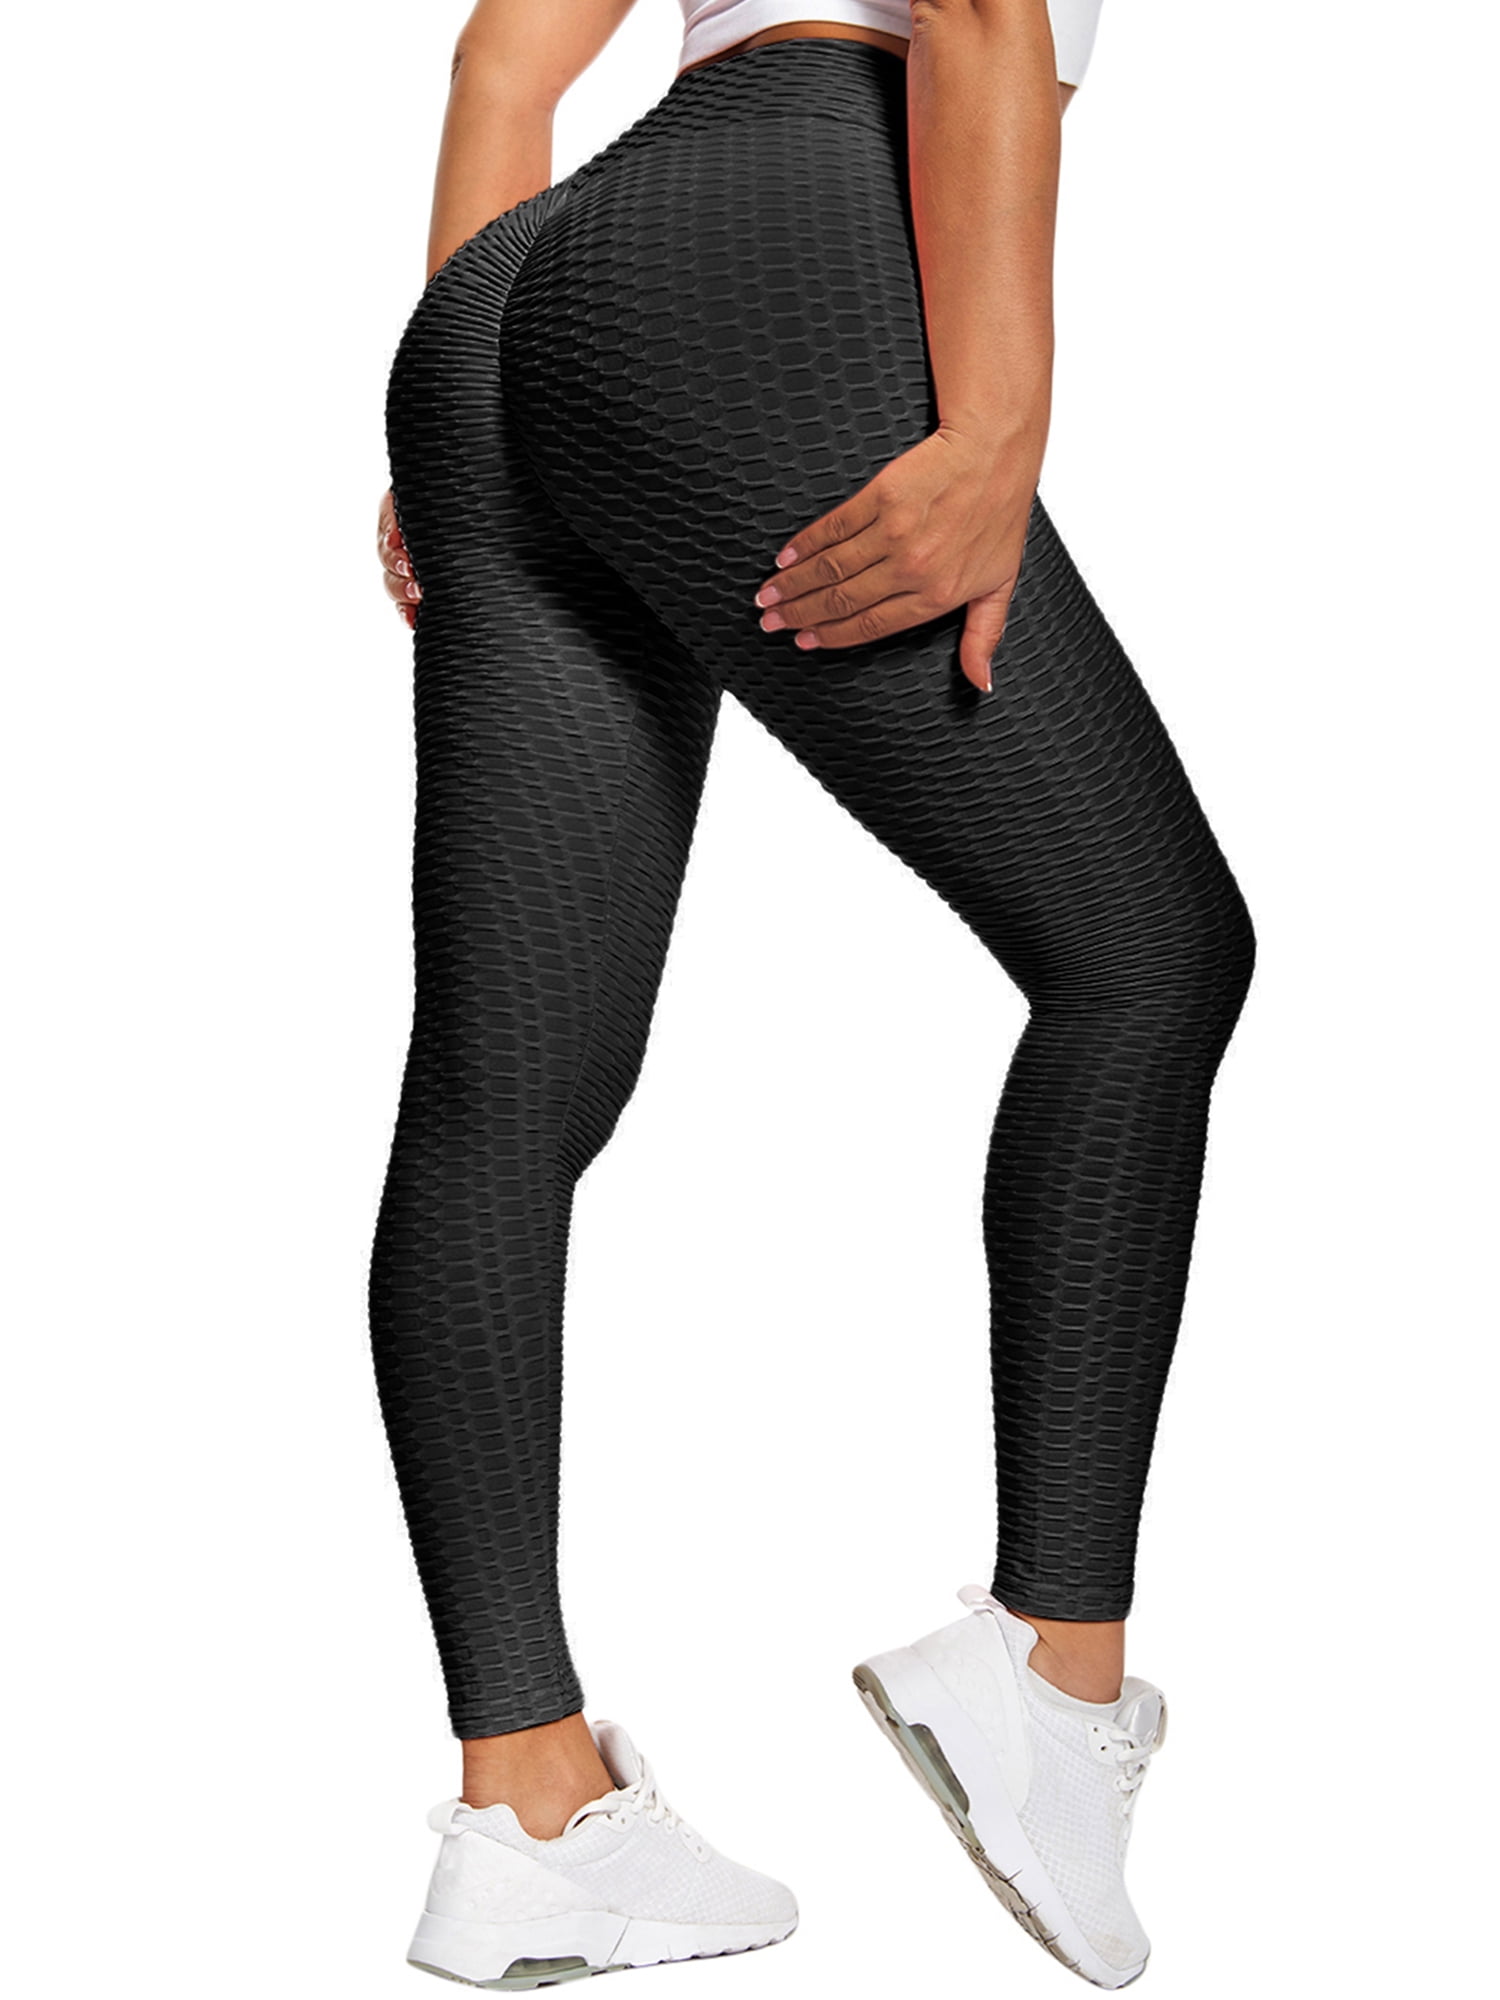 Nike Womens Yoga Running Athletic Leggings Black S 